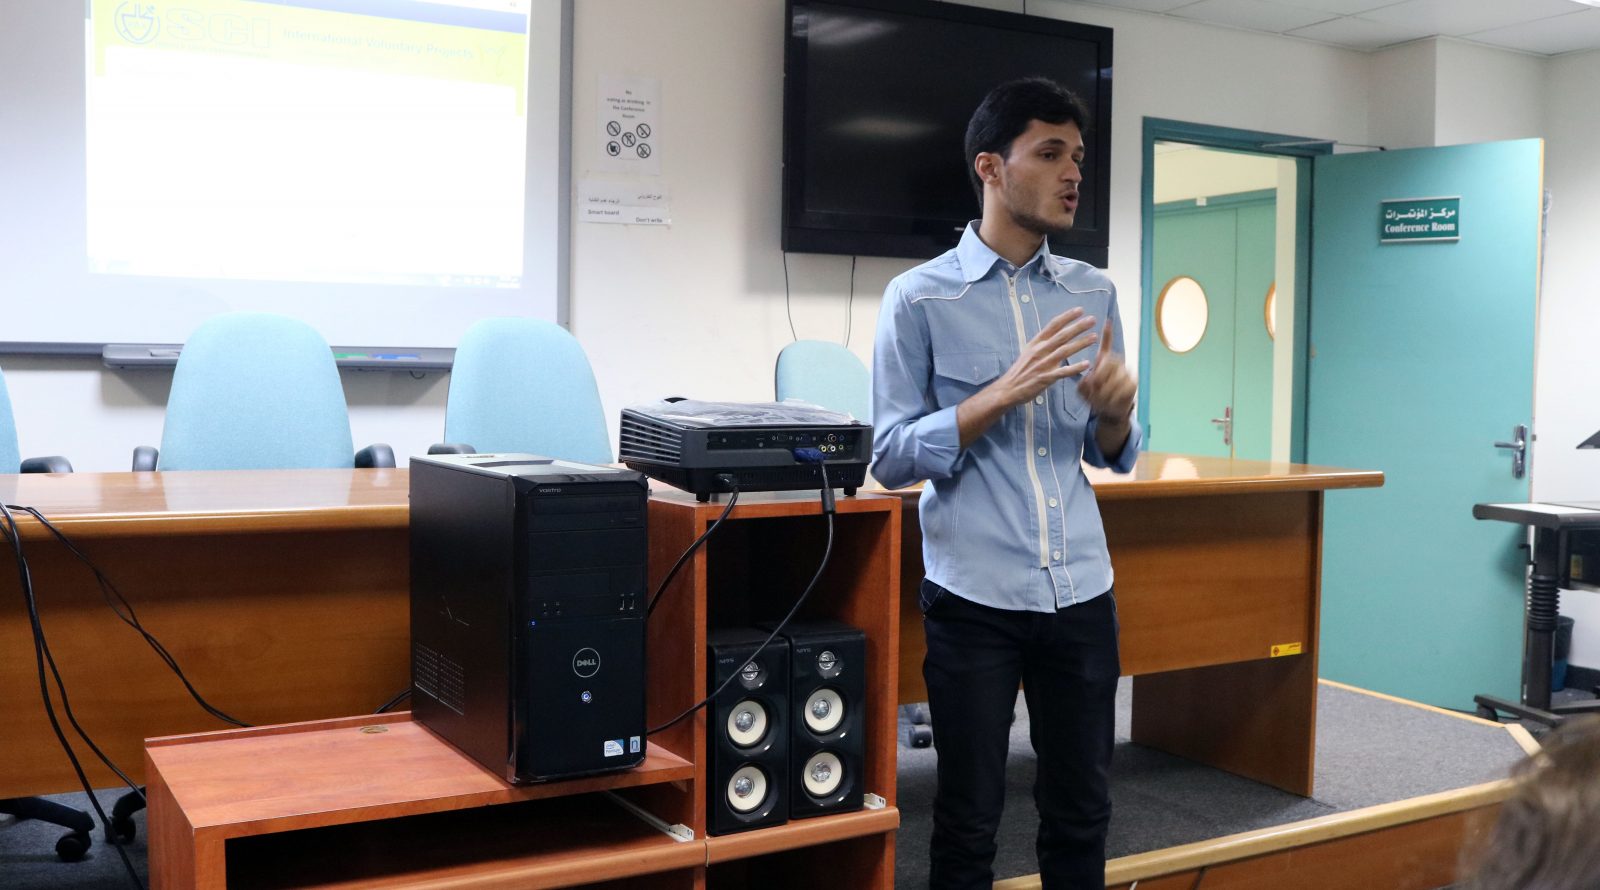 Zajel Organizes the “My Volunteering Experience in Russia” Workshop